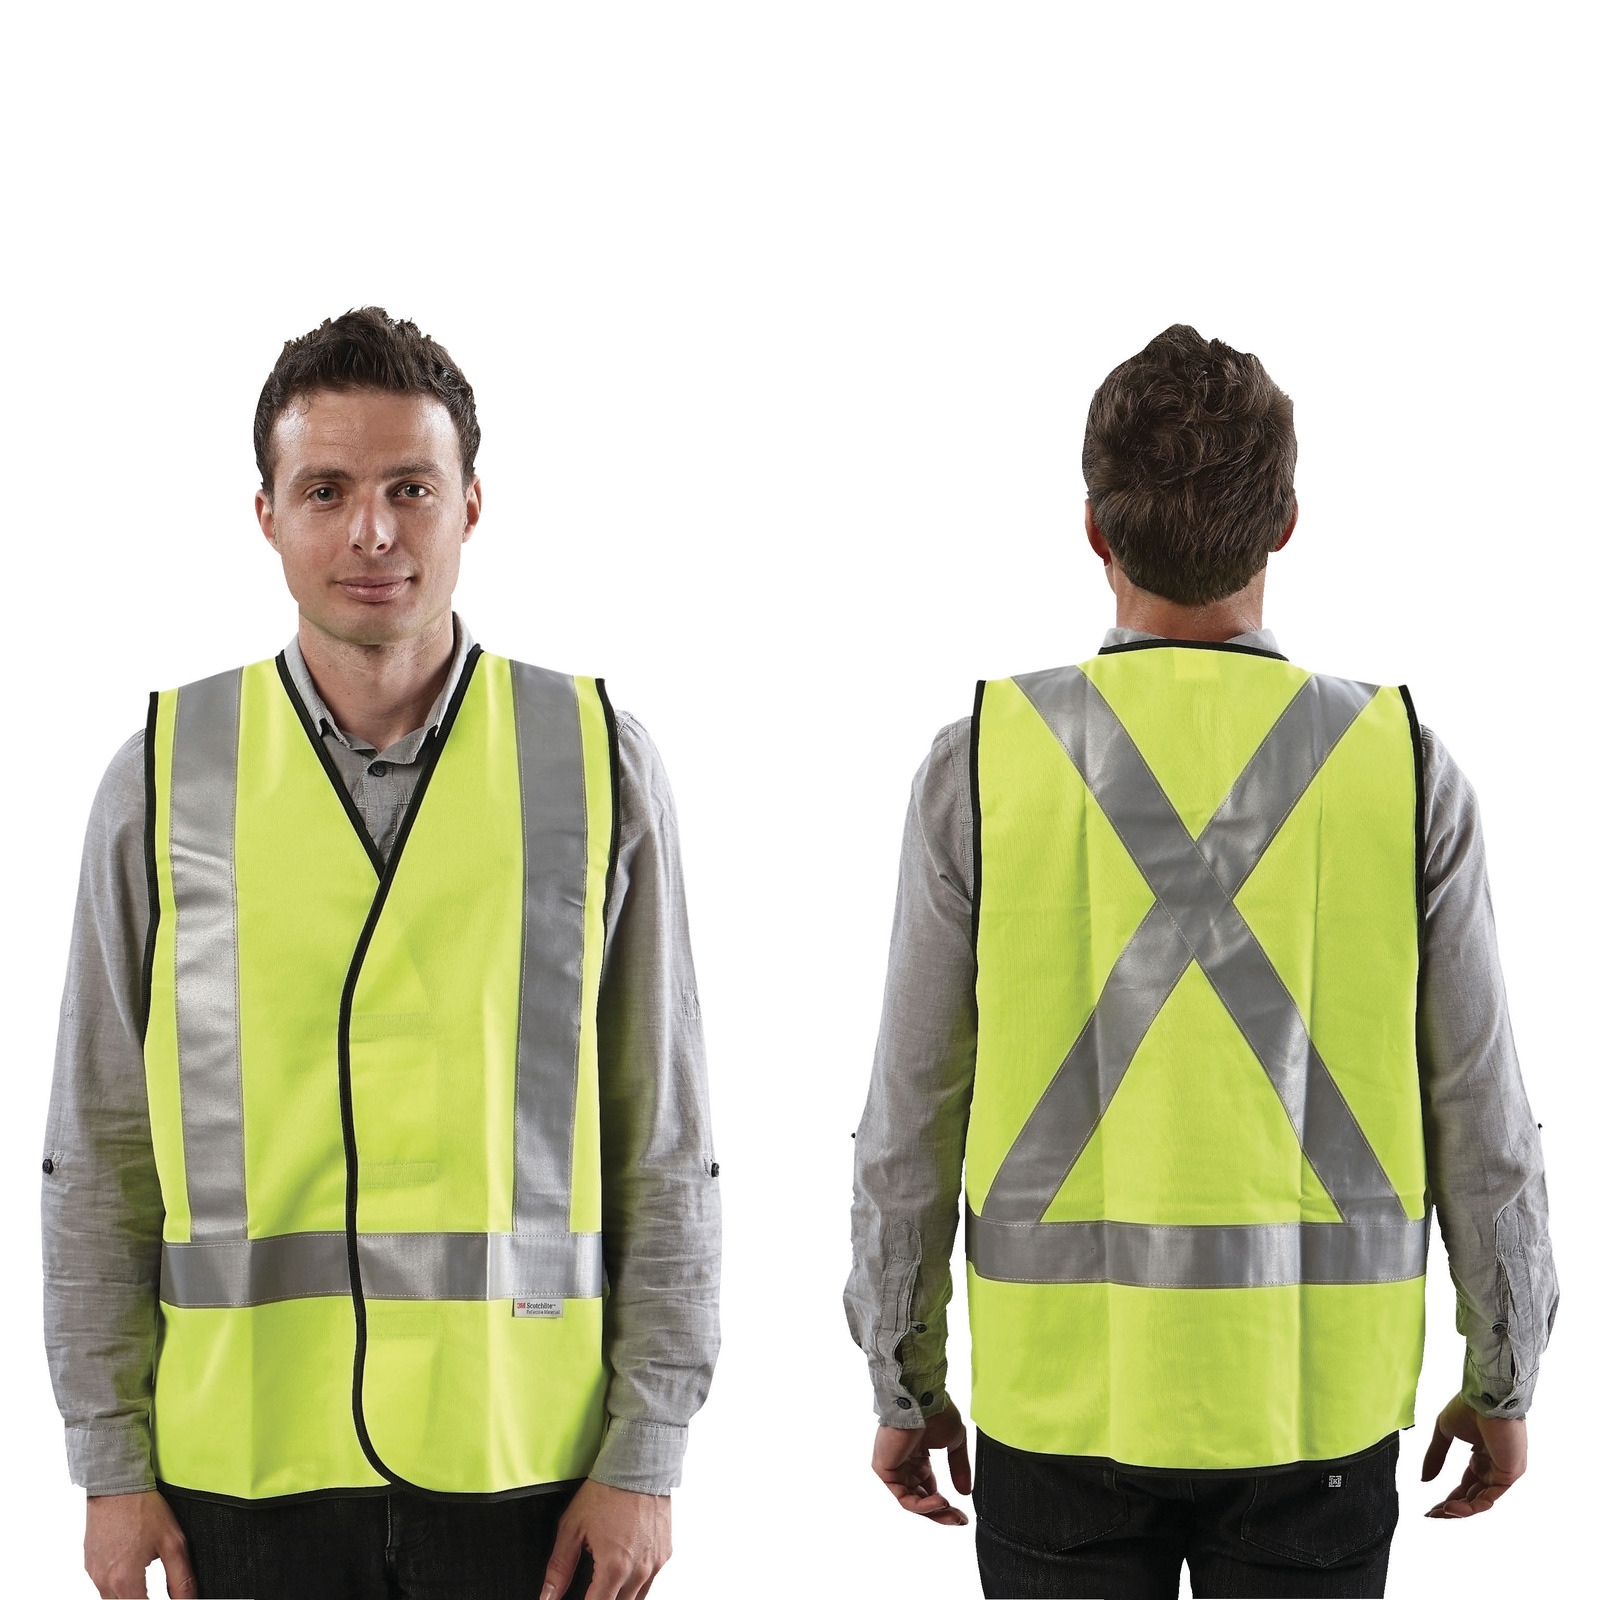 Yellow Safety Vest - Medium (D/N)